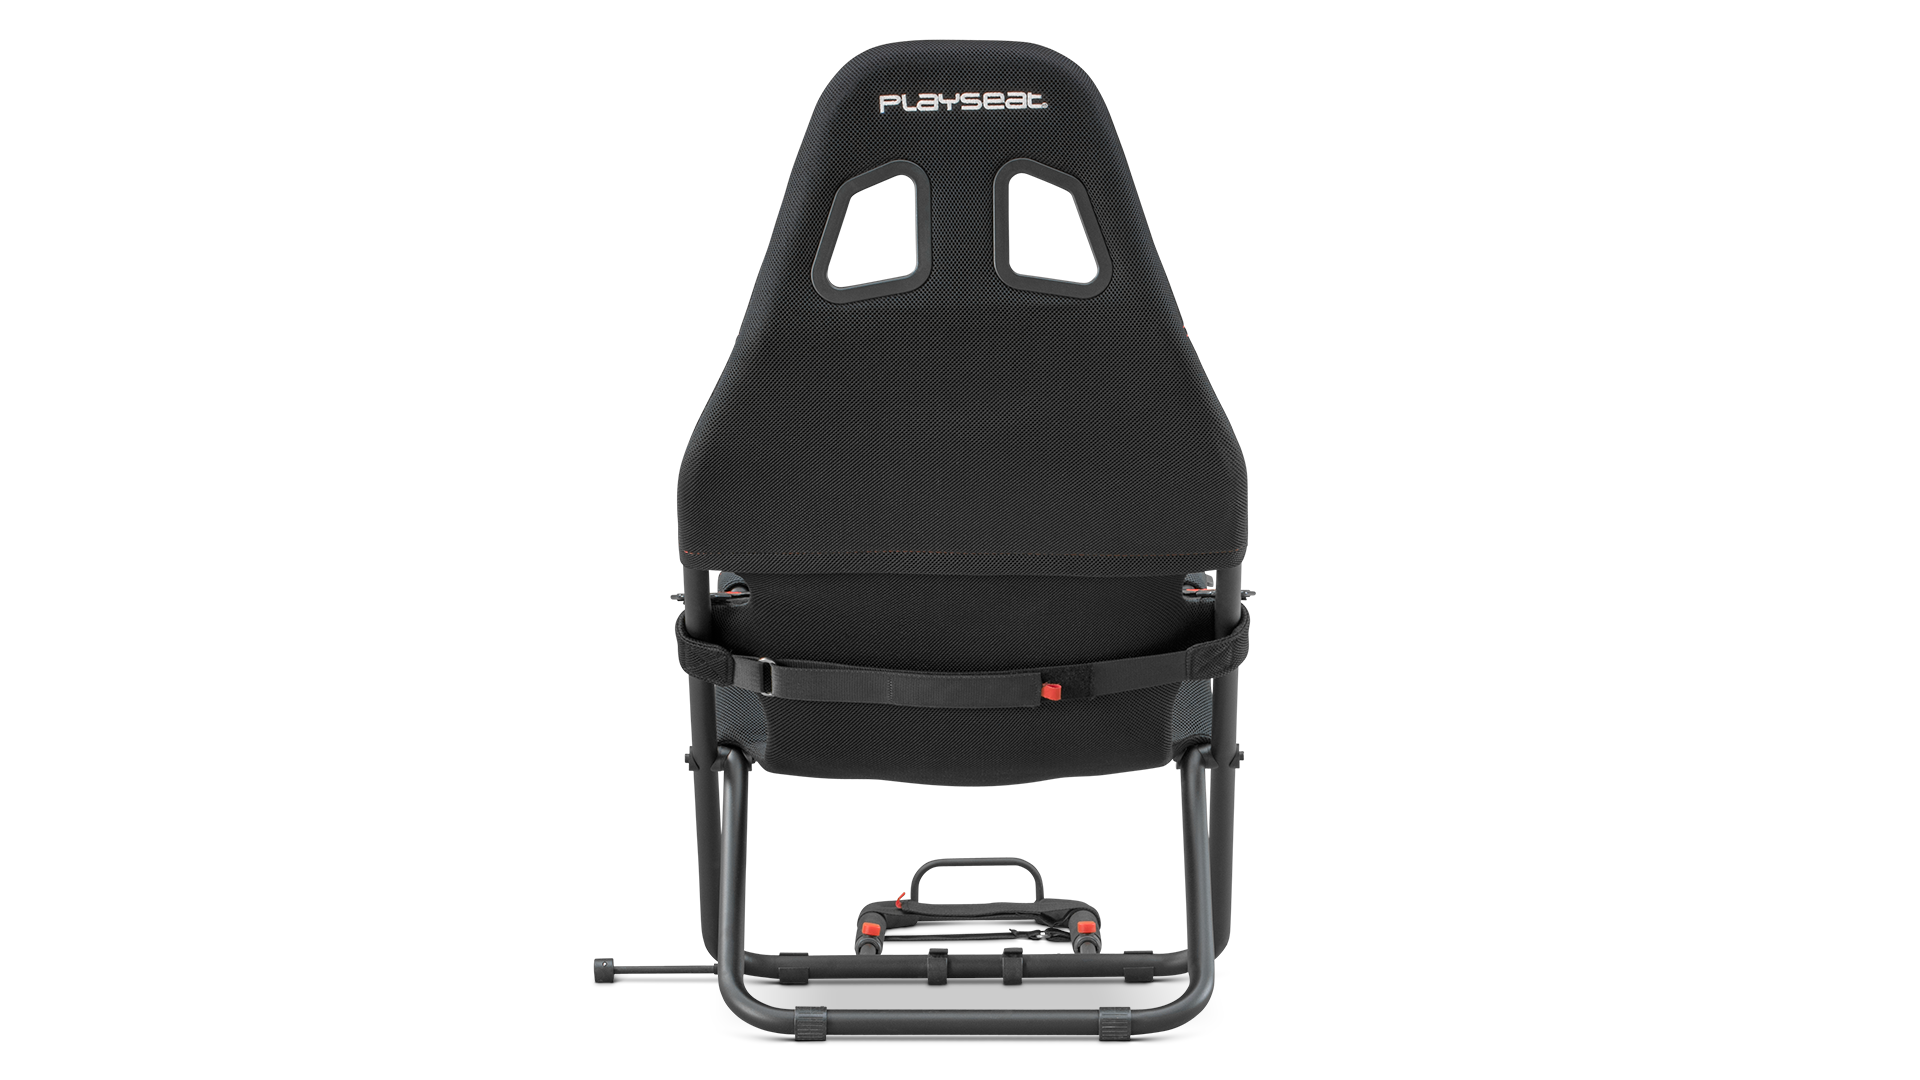 playseat-challenge-black-actifit-racing-seat-back-view-1920x1080.png